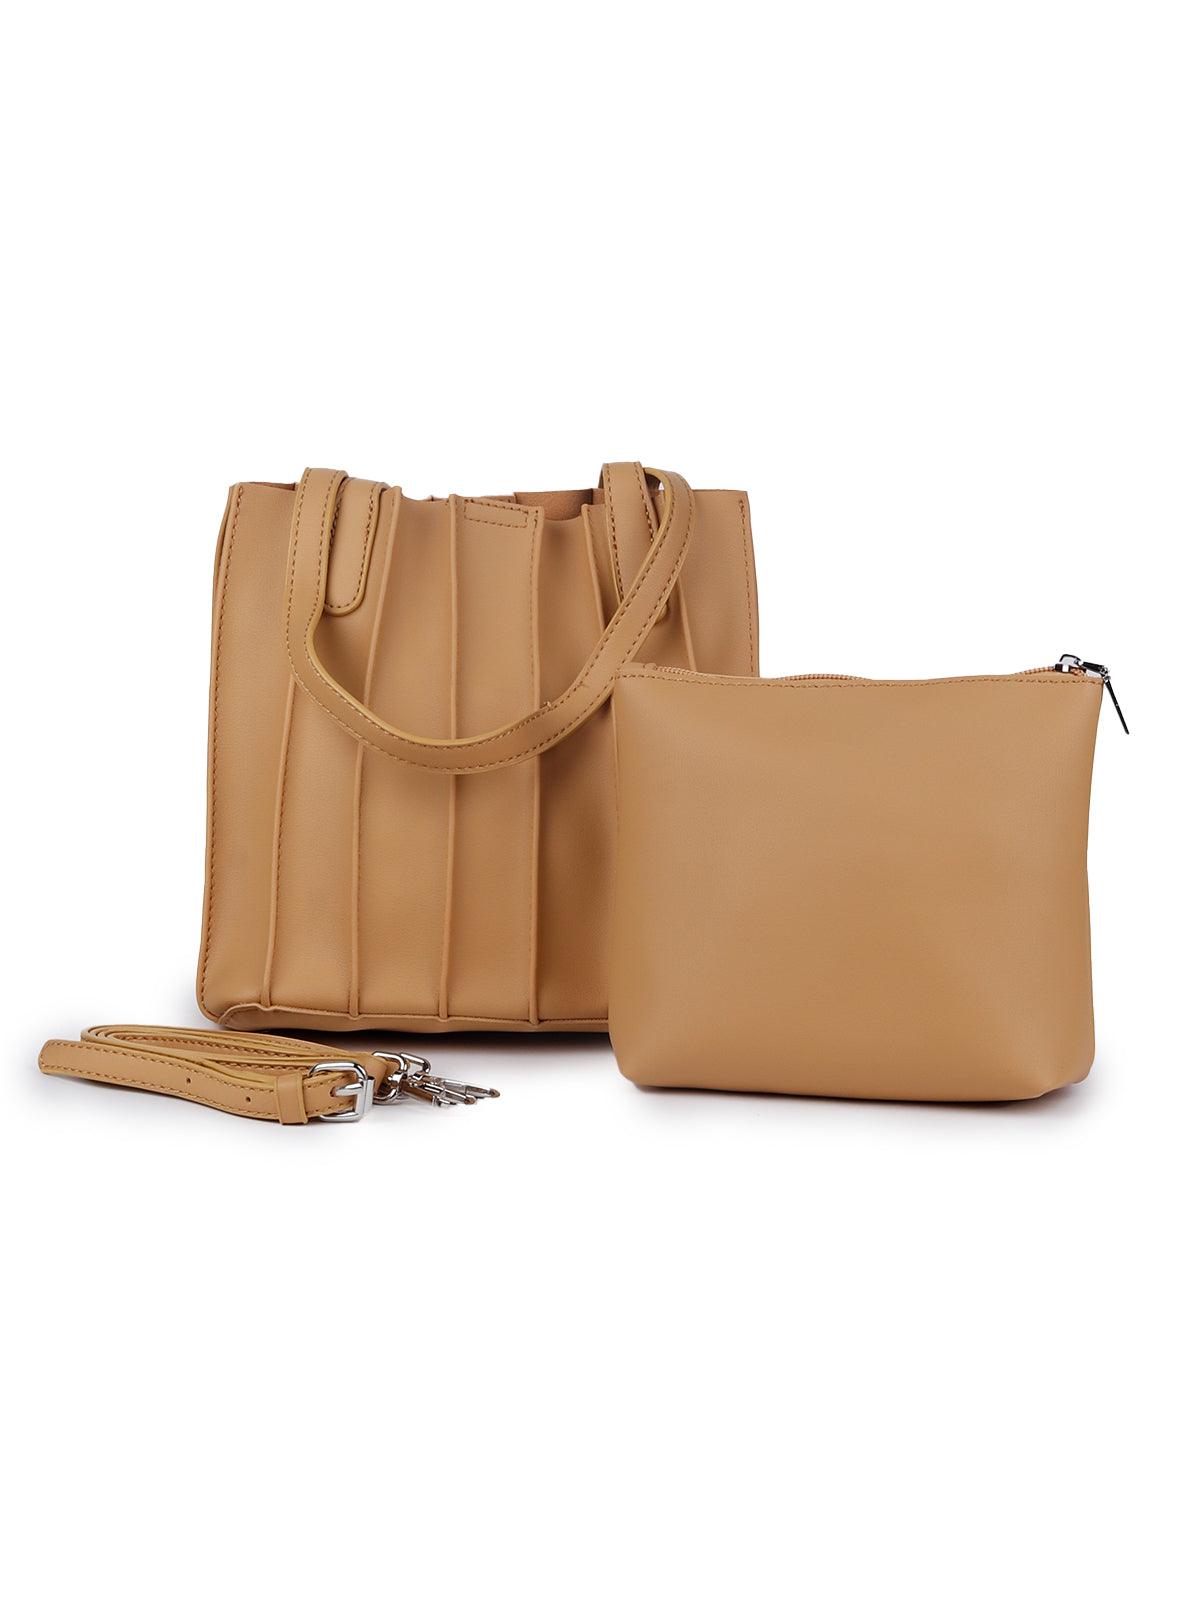 Classic beige handbag - Odette